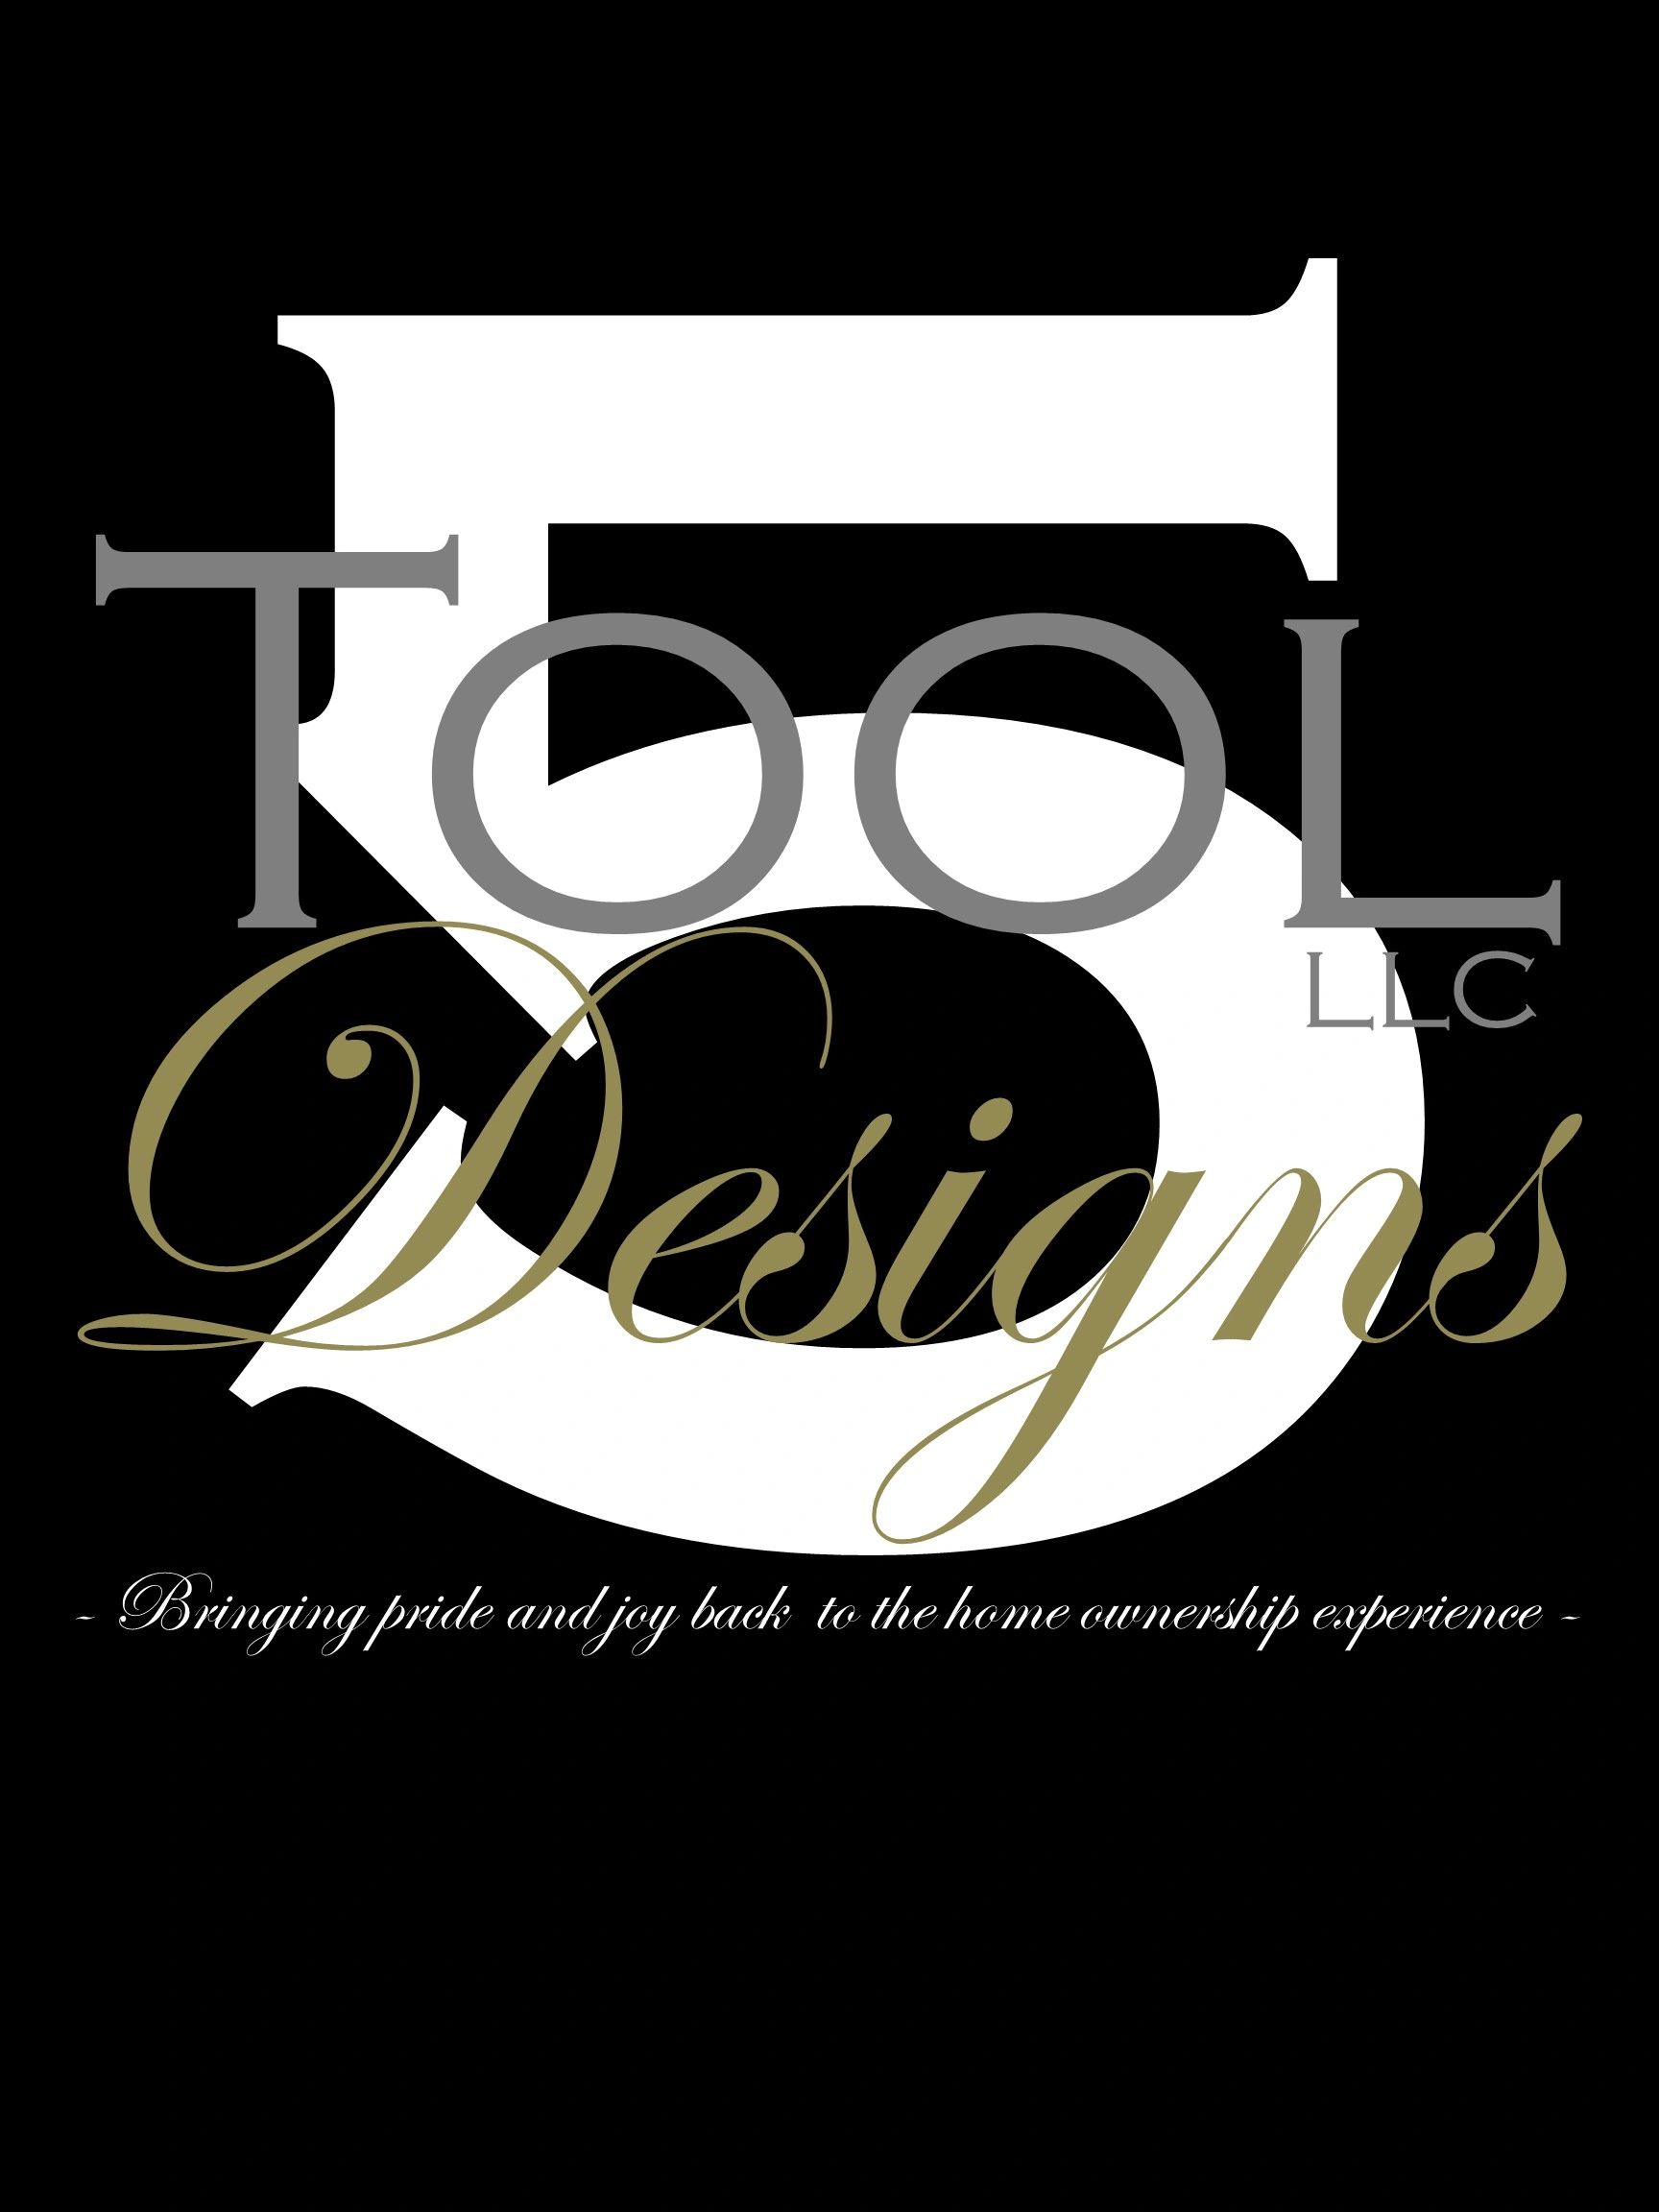 Five Tool Designs Logo